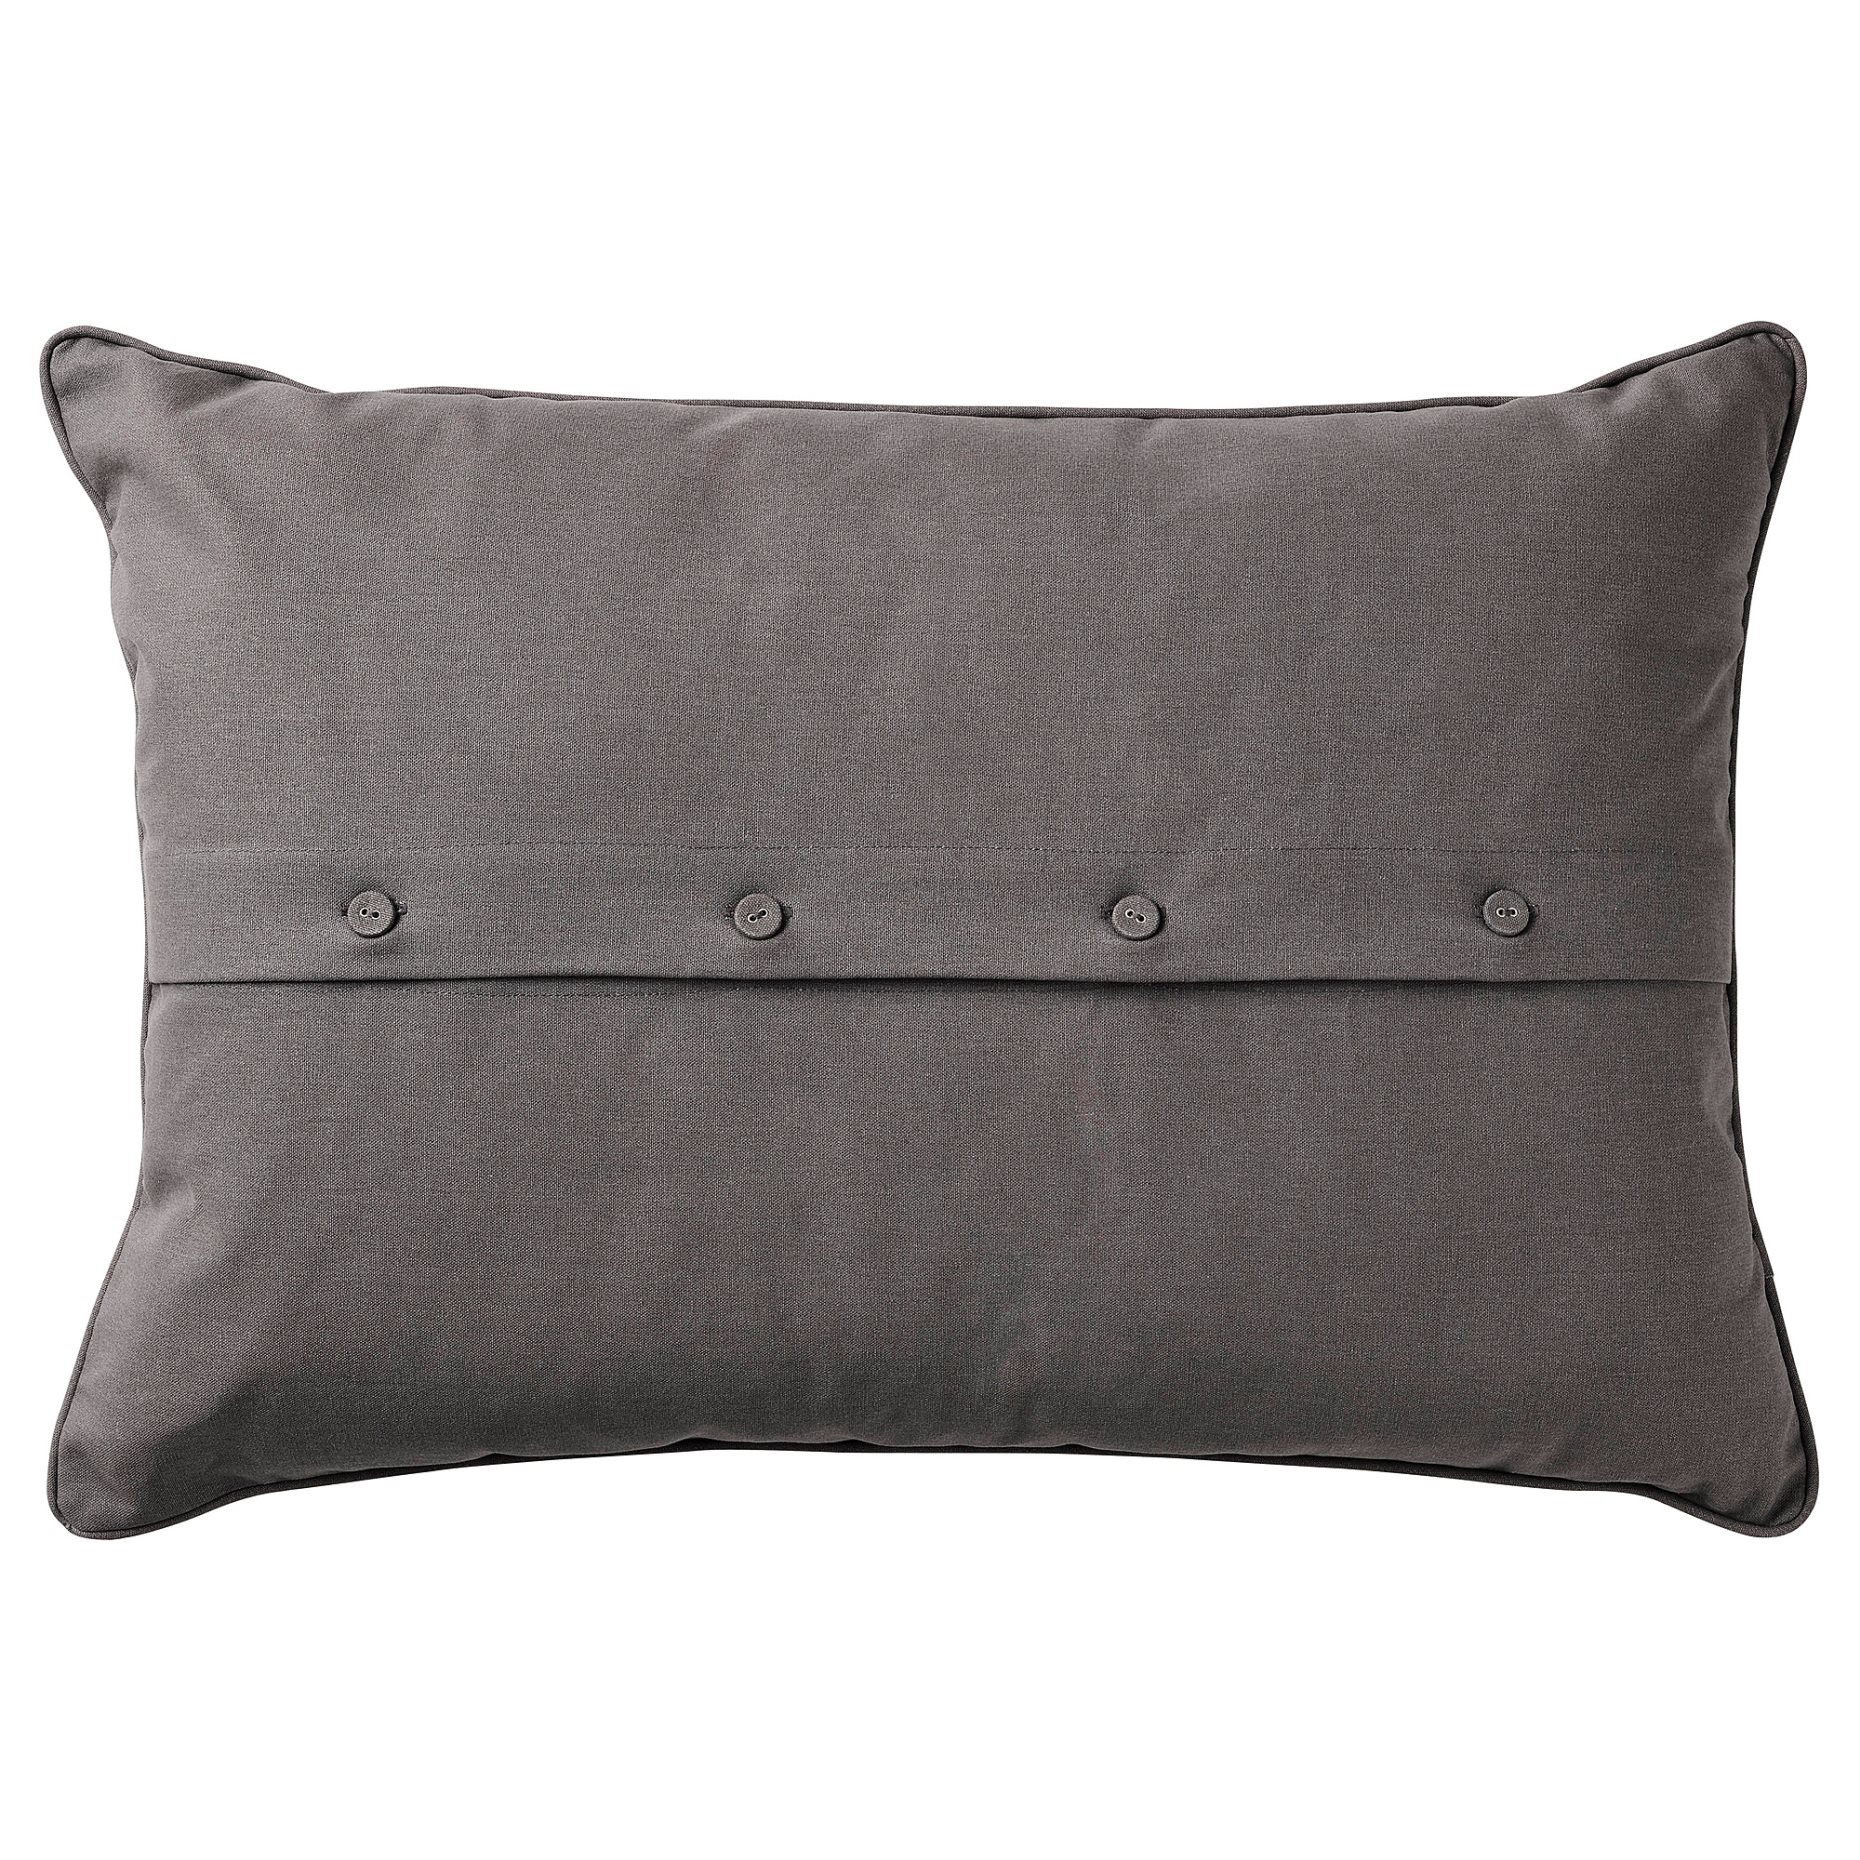 SKUGGNÄVA, cushion, 40x58 cm, 905.177.82